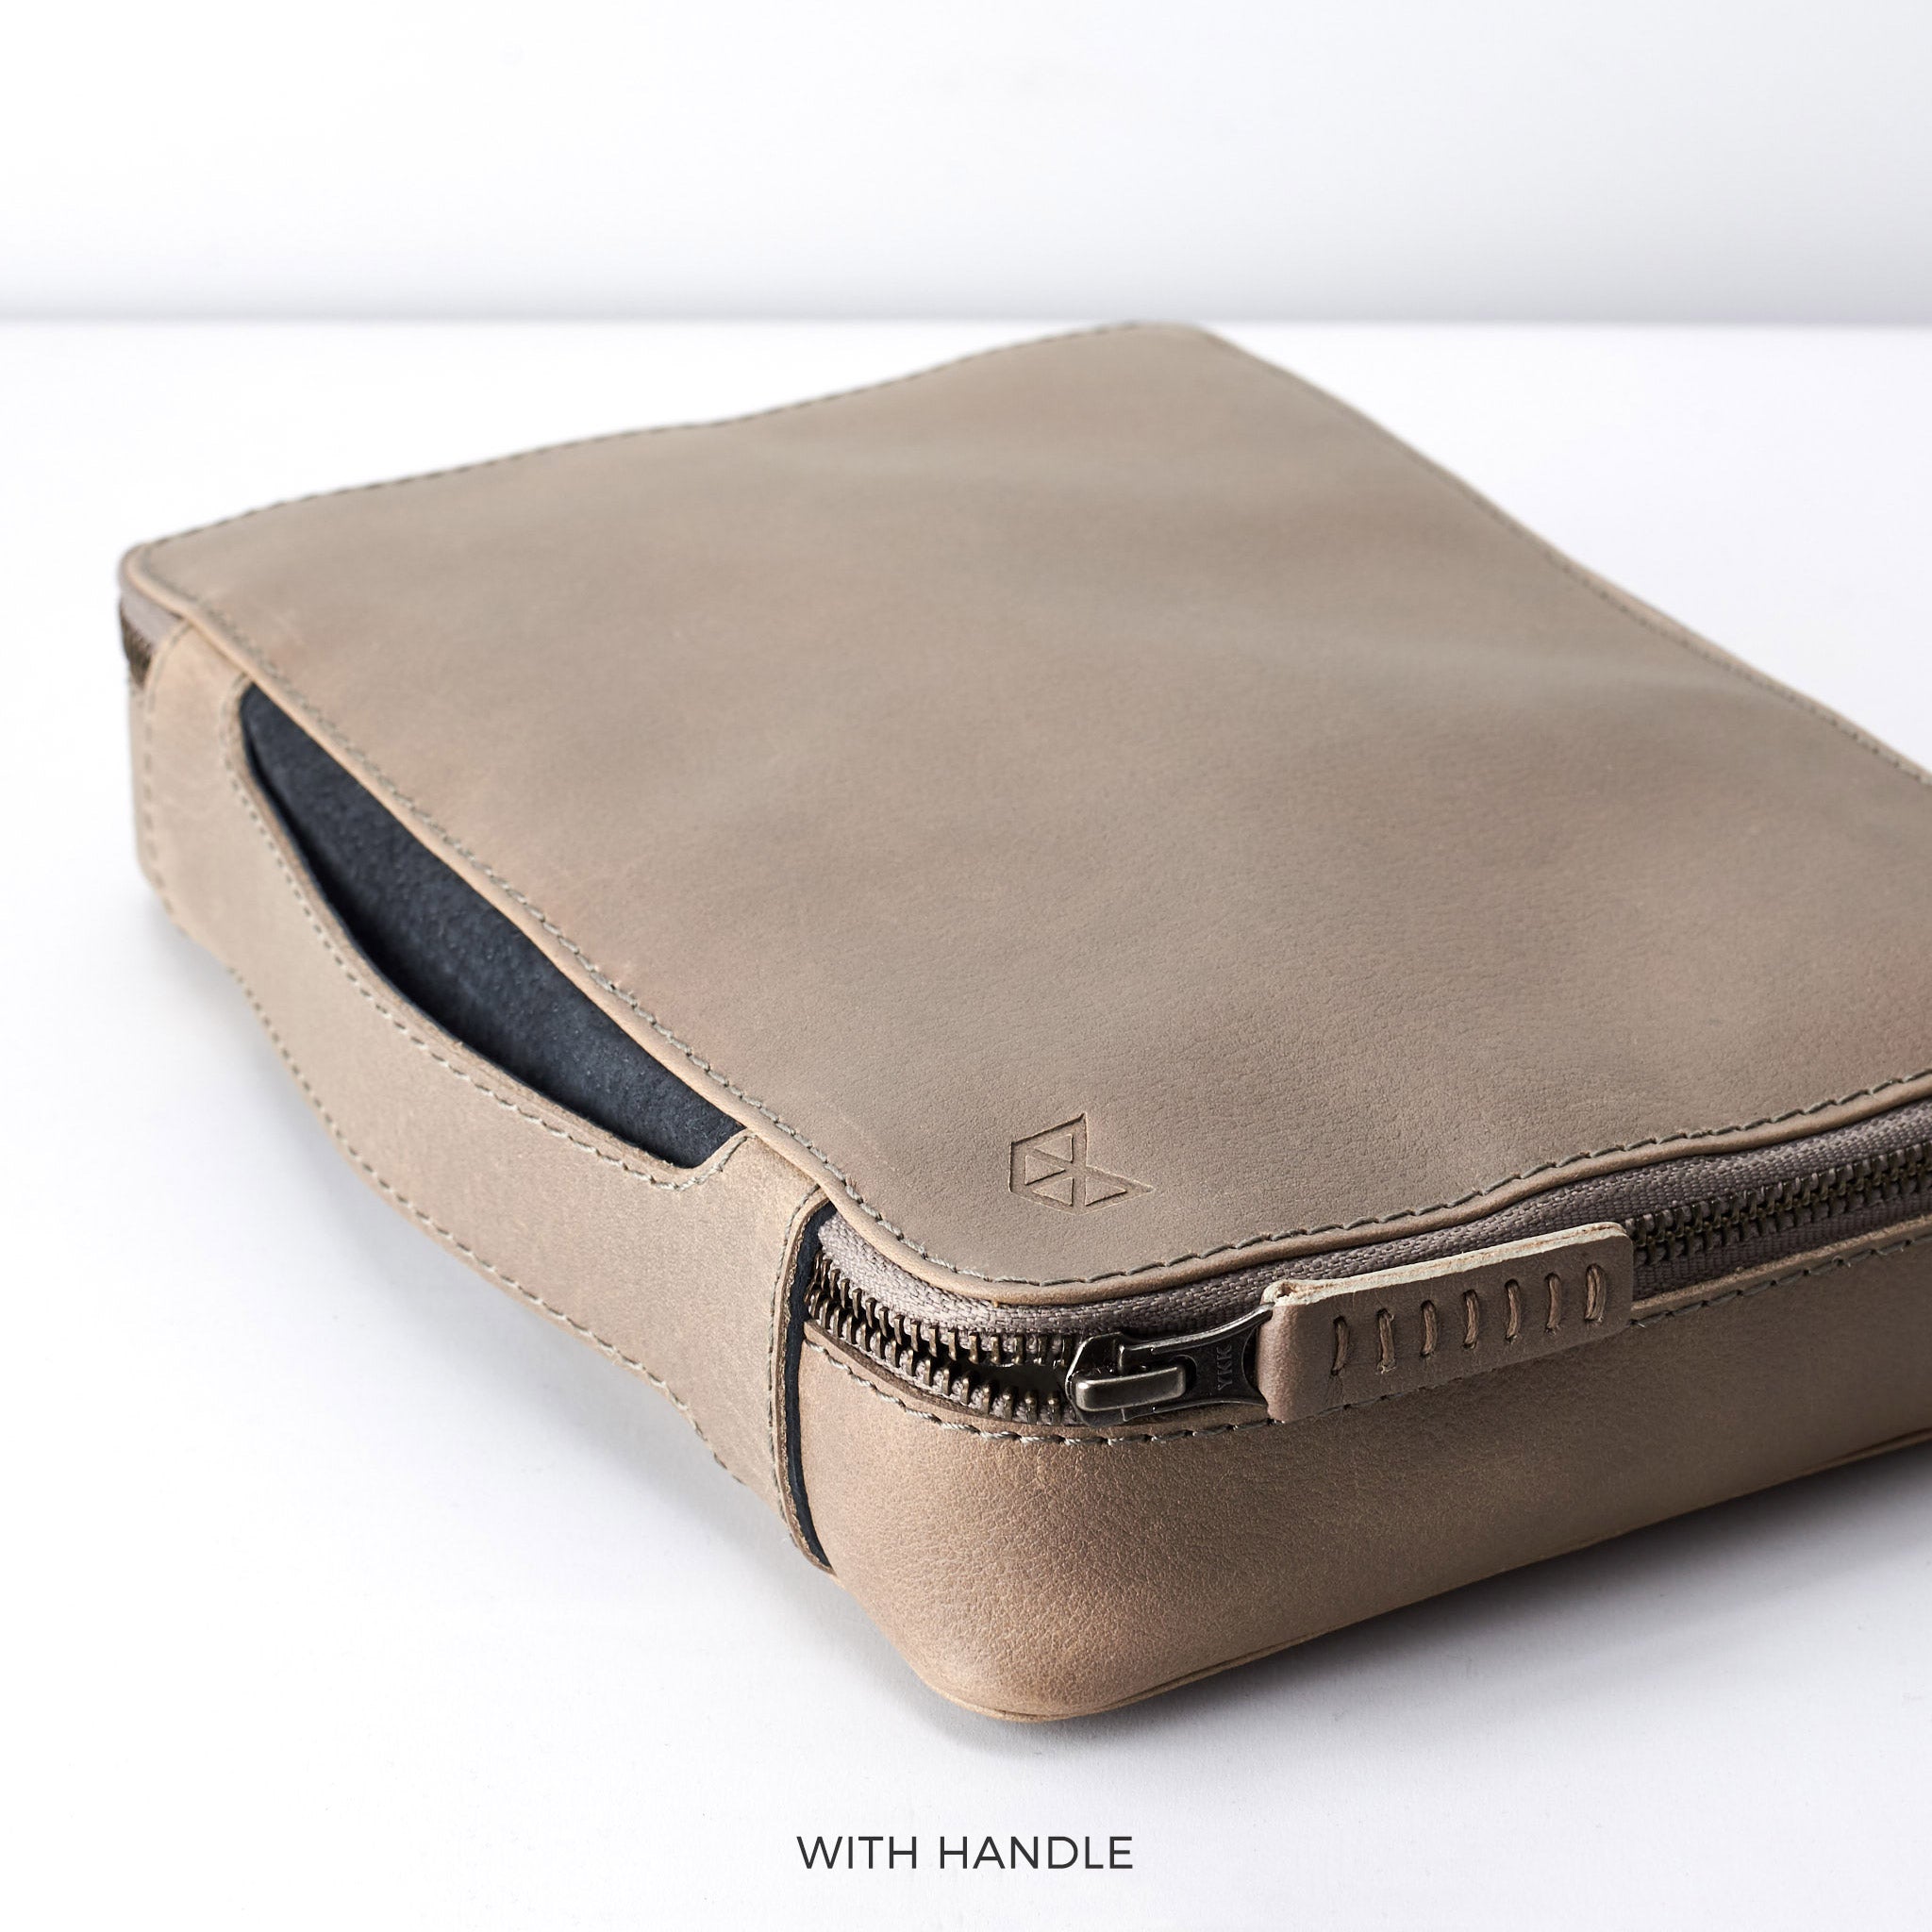 13 Inch Cute Laptop Sleeve Bag For Mac Ipad Pro Cotton Laptop Tablet Inner  Case | eBay